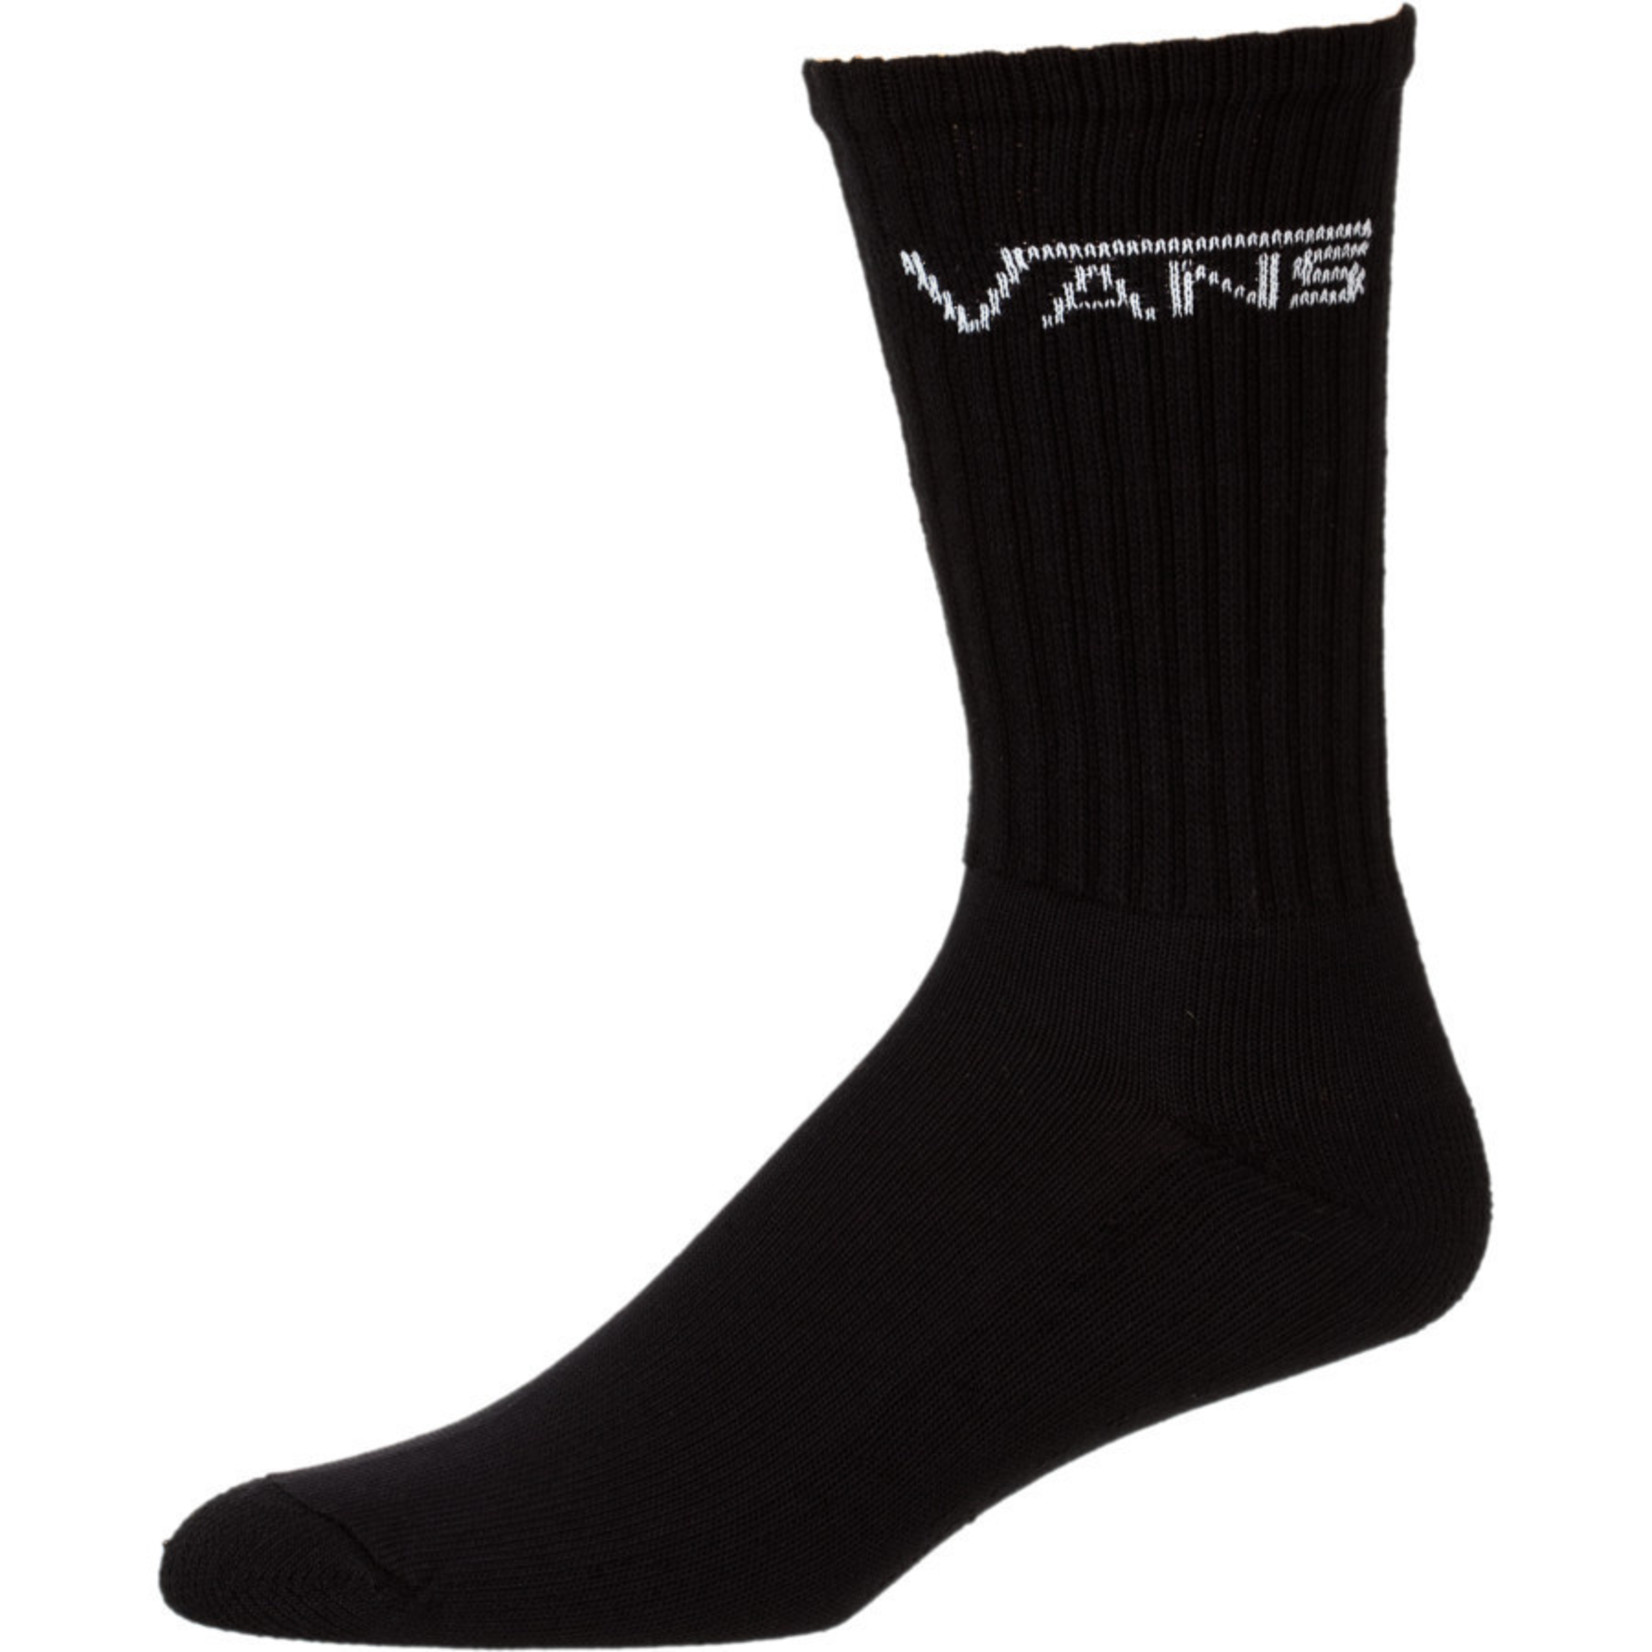 Vans Vans Off The Wall Classic Crew Socks 3 Pack - Black/Black 6.5-9